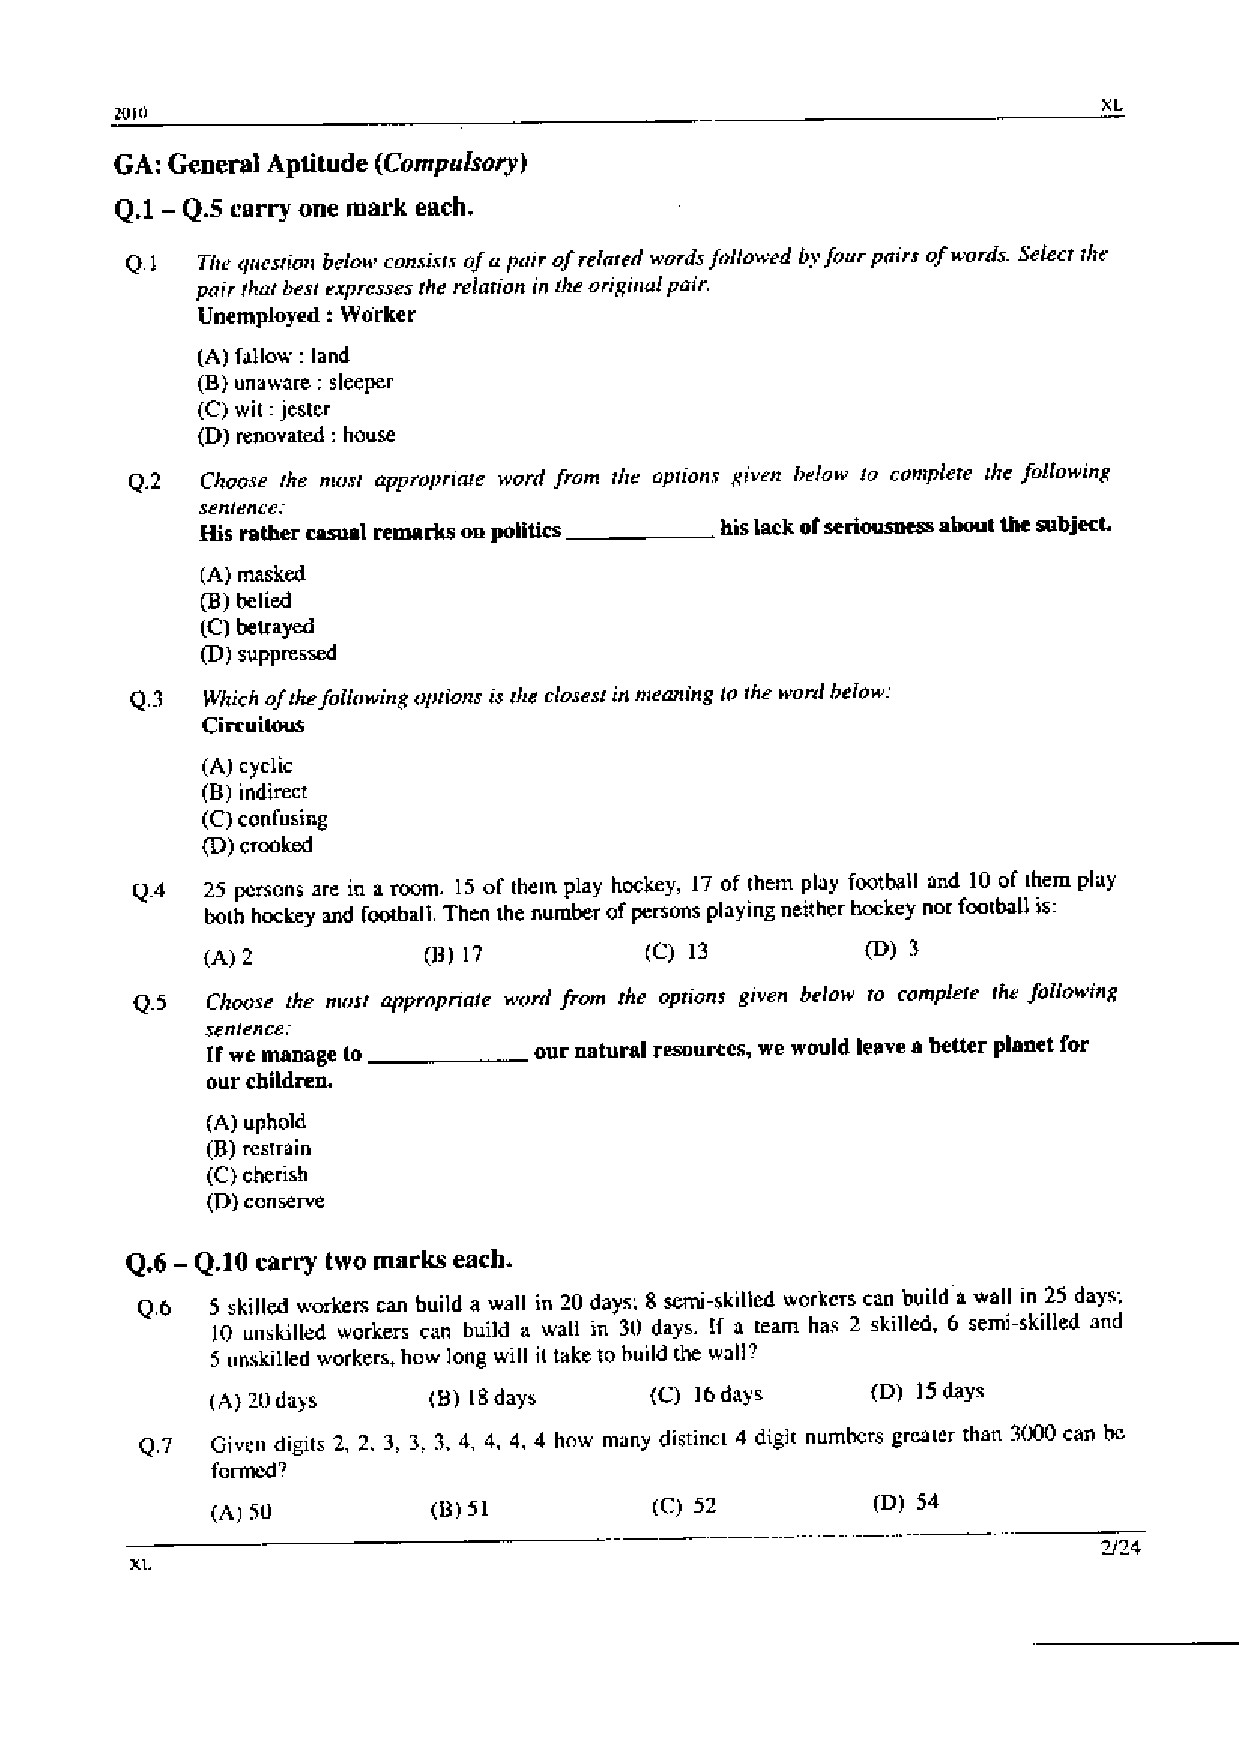 GATE Exam Question Paper 2010 Life Sciences 2